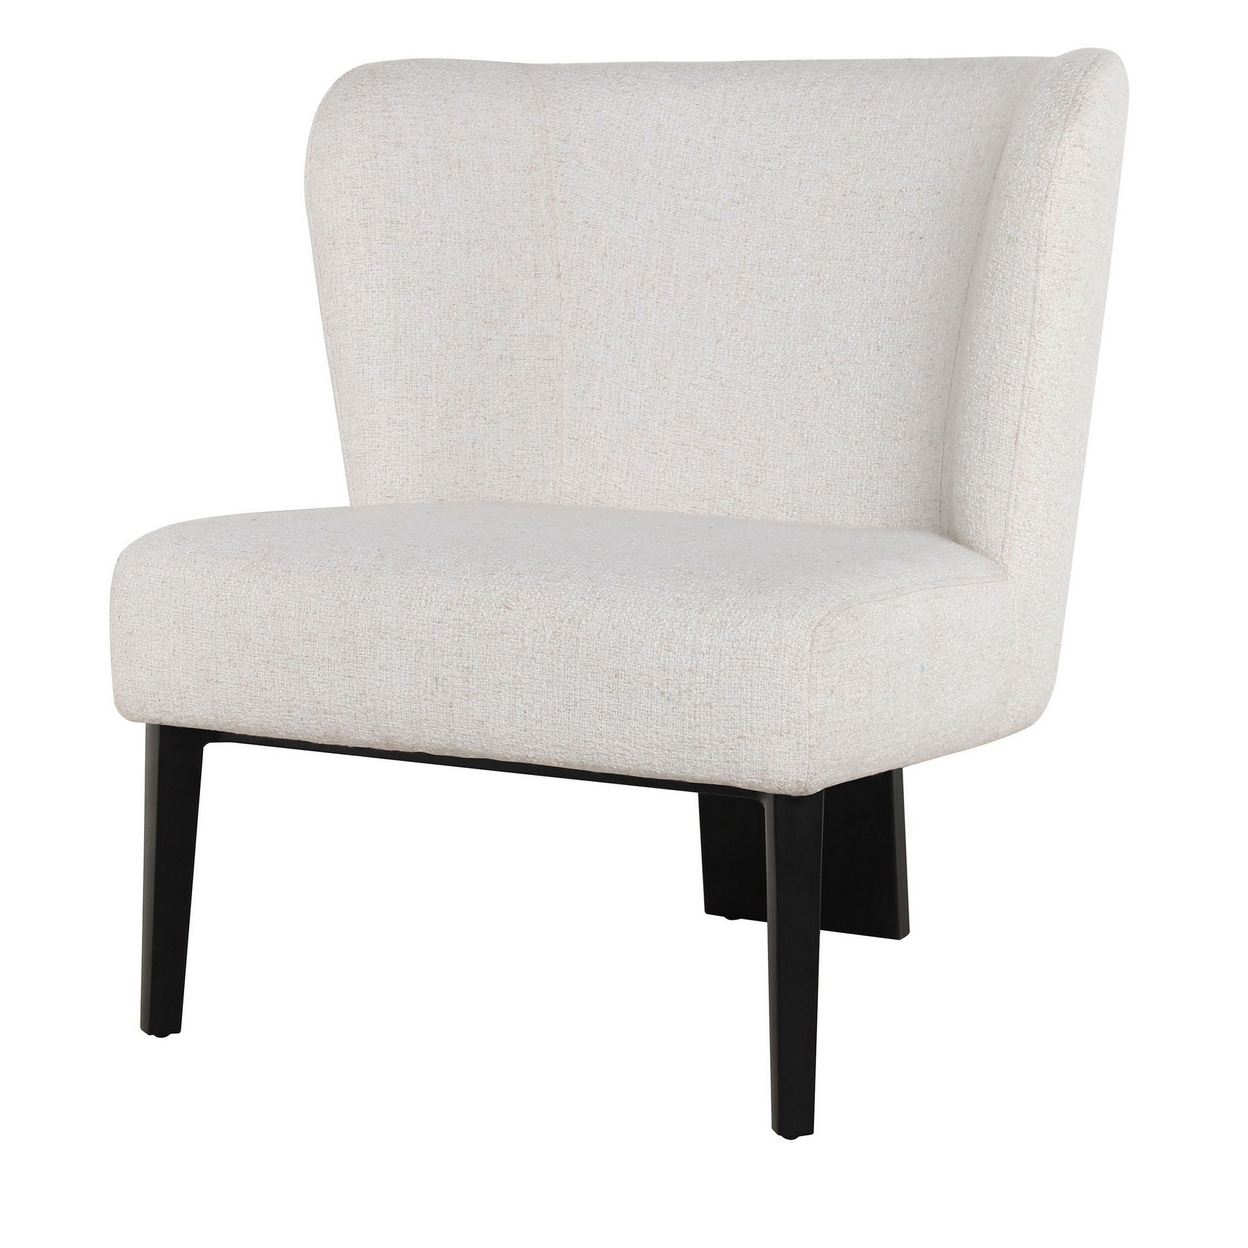 Reno 30 Inch Lounge Chair, Wide Backrest, Crisp White Fabric, Metal Legs- Saltoro Sherpi